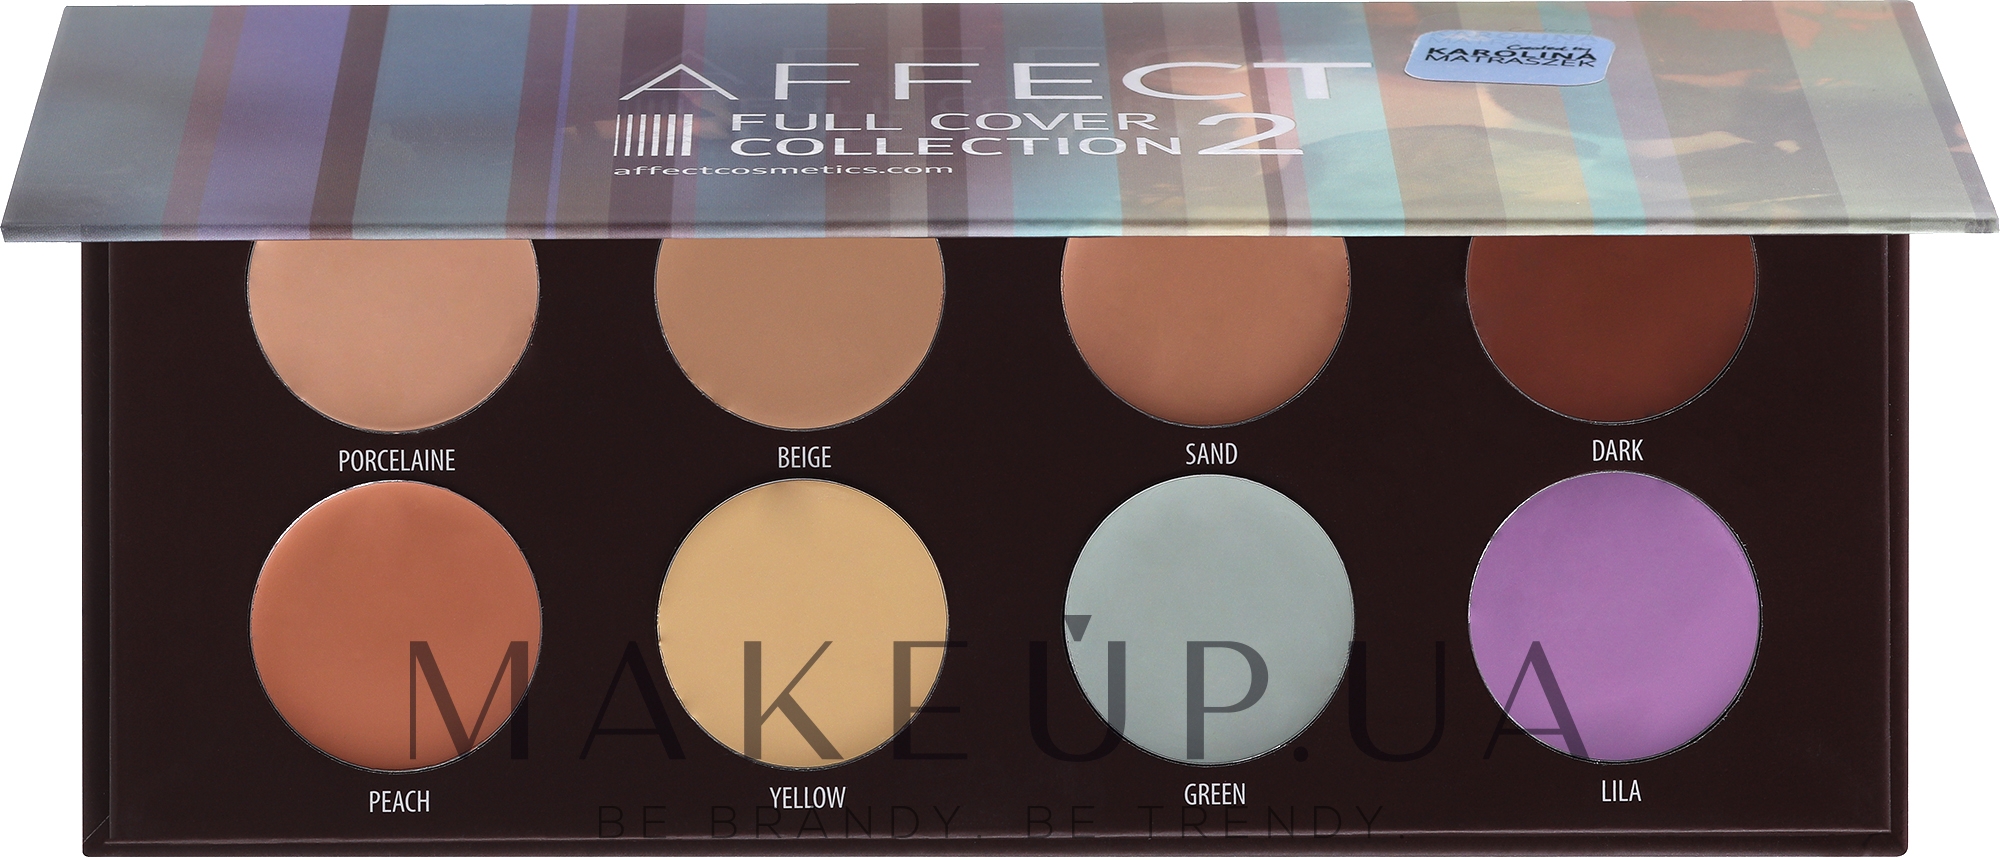 Палетка корректоров для лица - Affect Cosmetics Camouflage Palette Full Cover Collection 2 — фото 8x2.7g